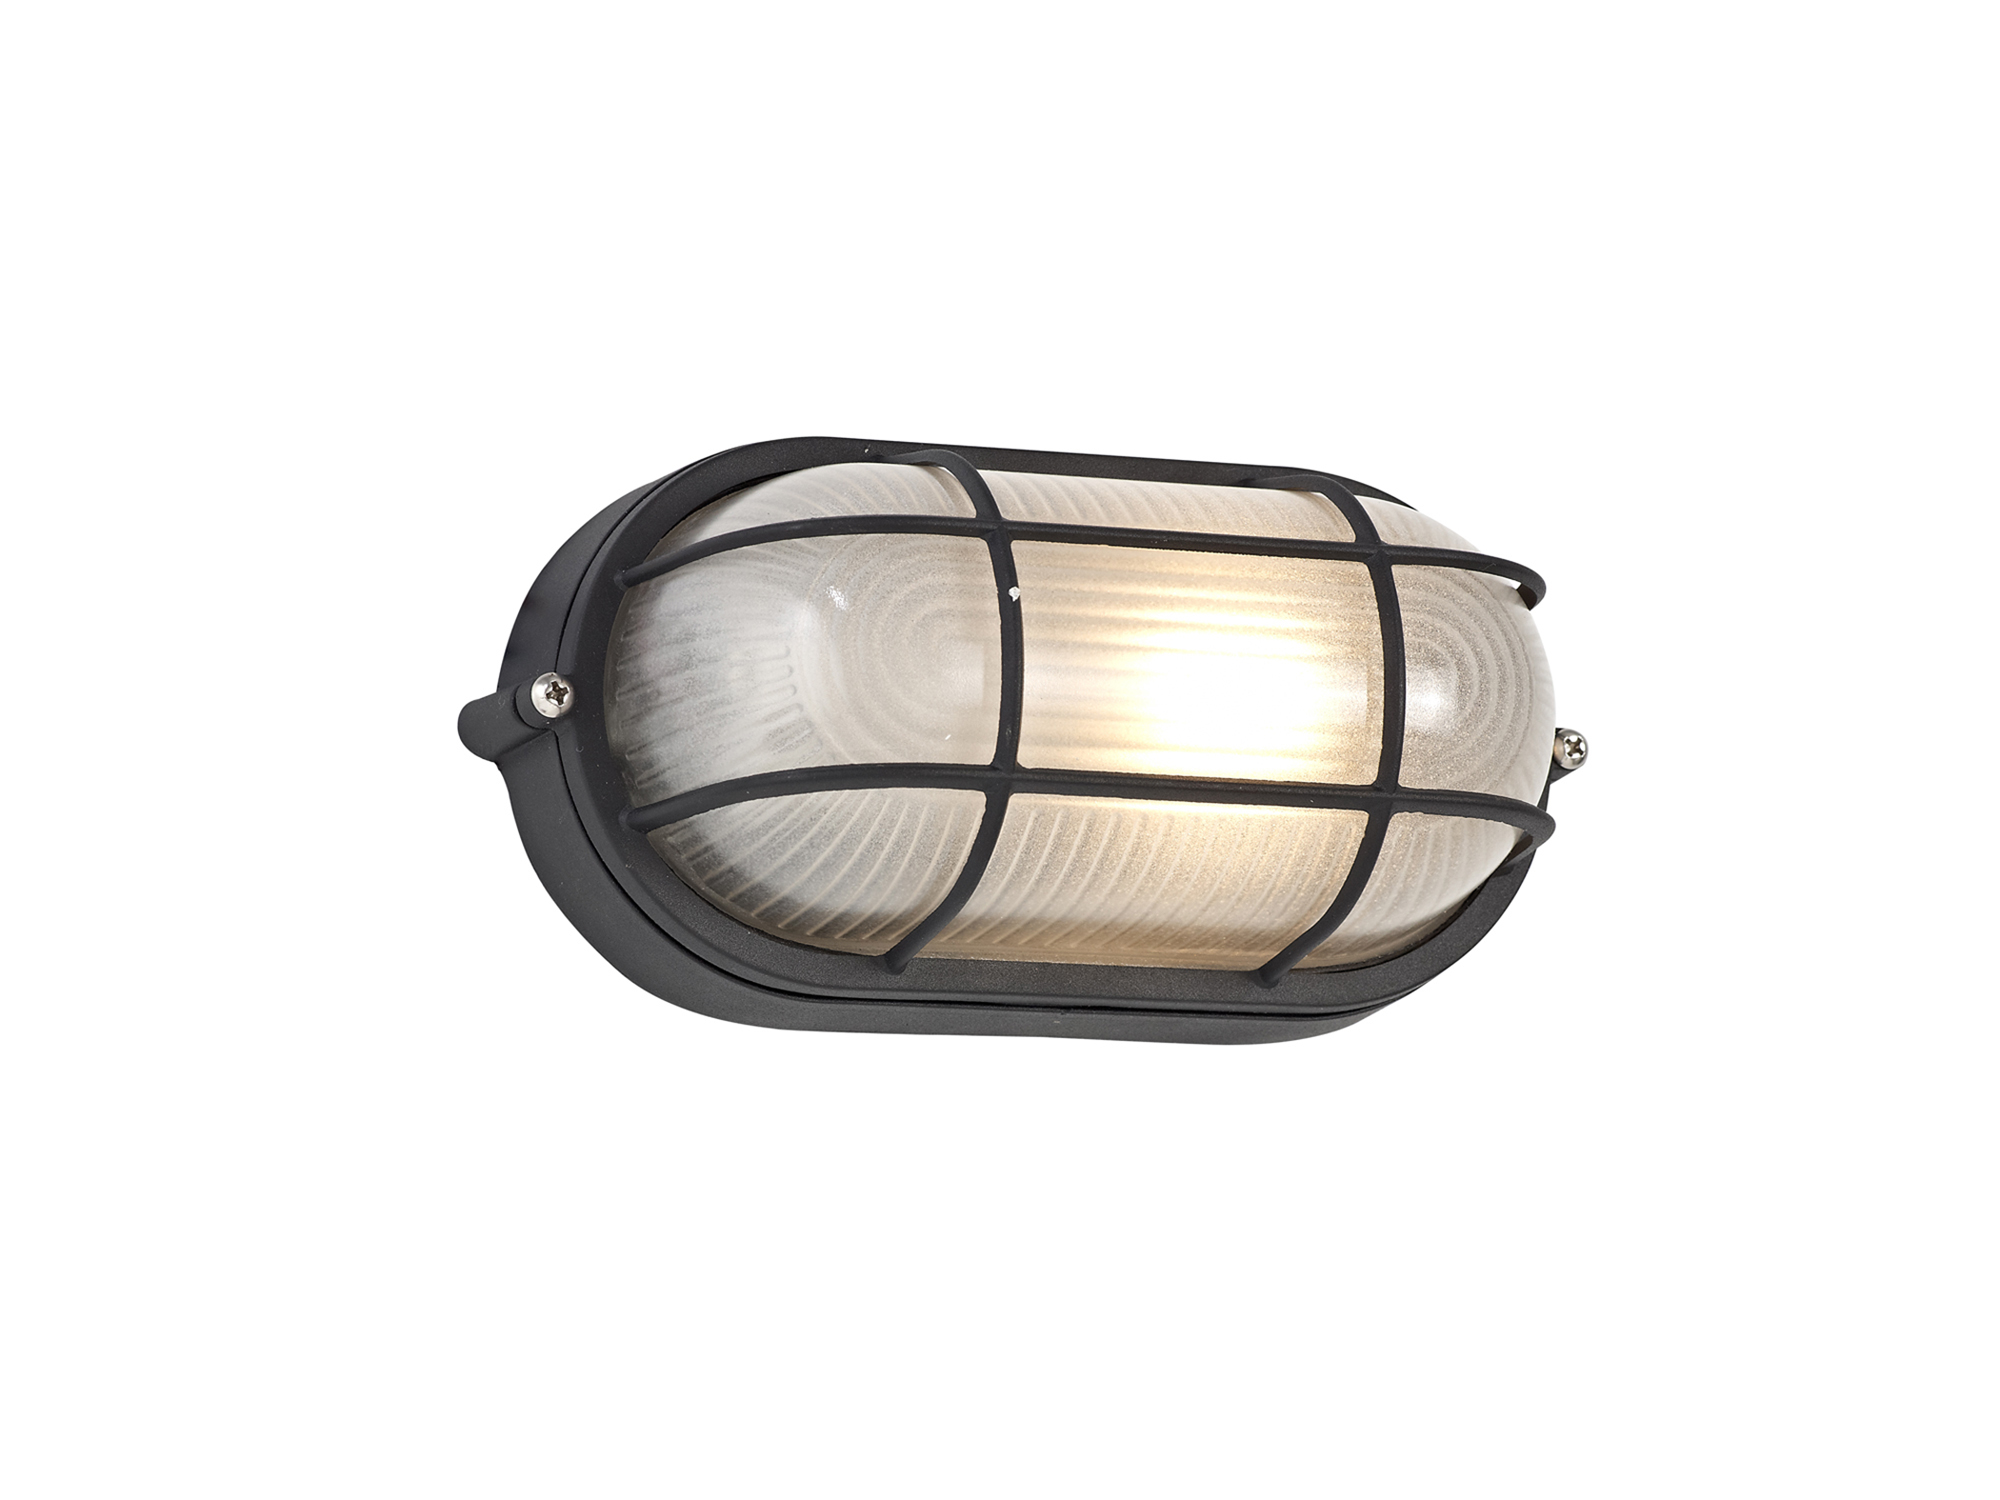 D0480  Avon Oval Wall Lamp 1 Light IP44 Outdoor Black